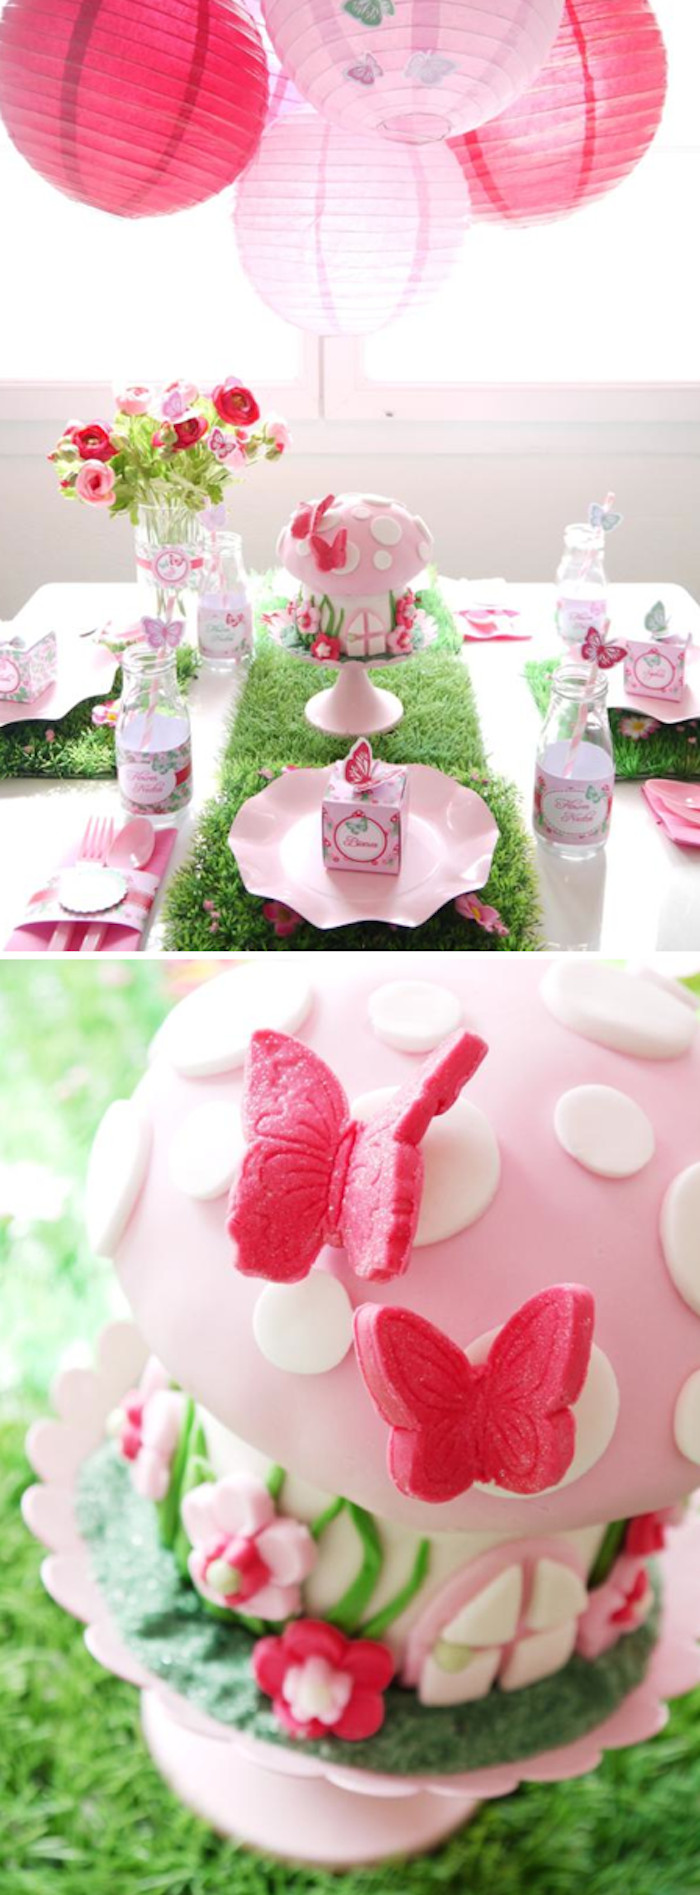 Fairy Birthday Party Supplies
 Kara s Party Ideas Pixie Fairy Pink Girl Birthday Party